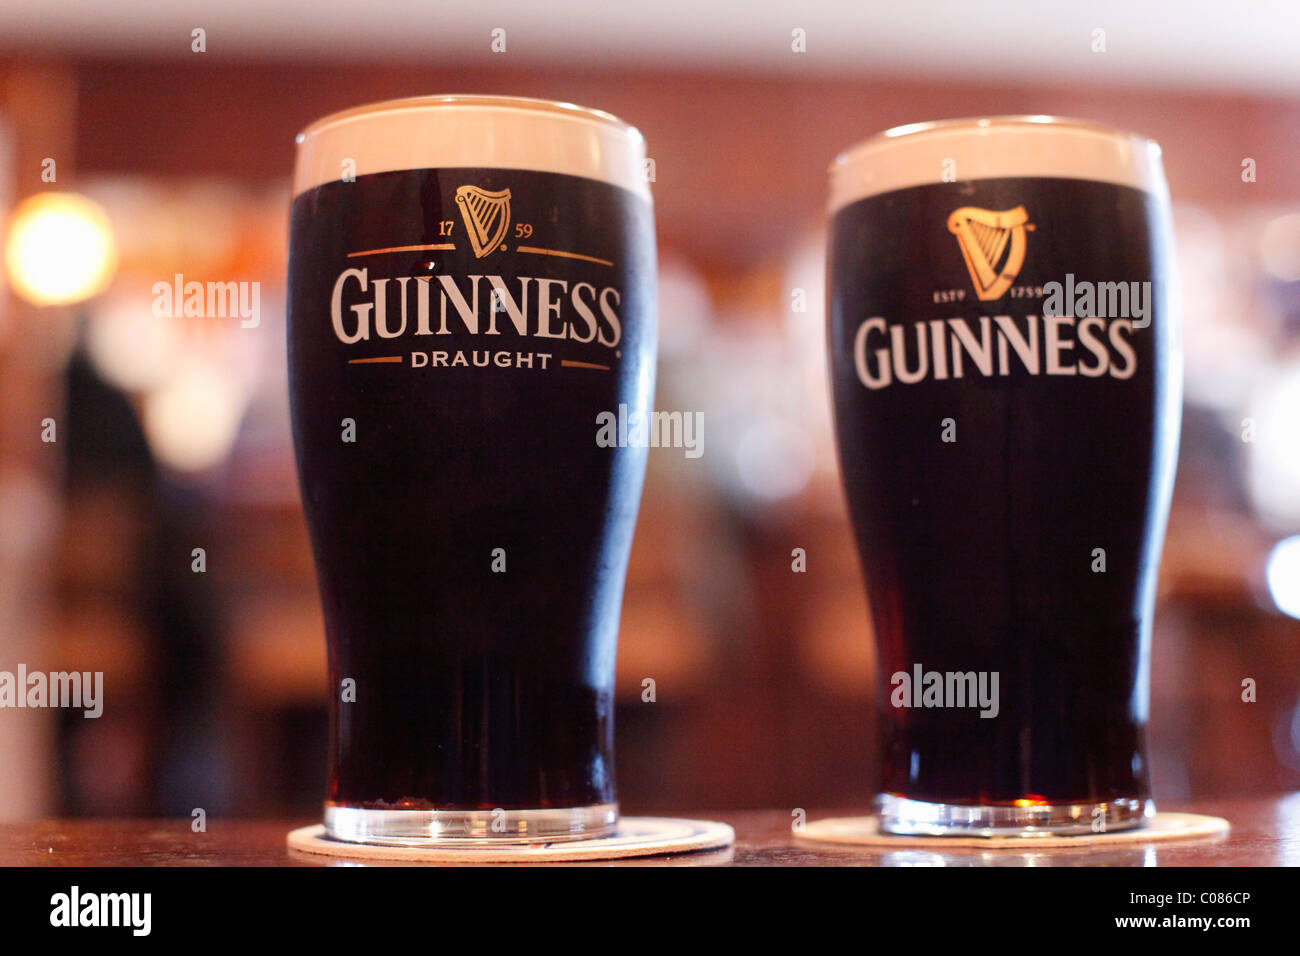 Las pintas de cerveza Guinness stout, Irlanda, Islas Británicas, Europa Foto de stock